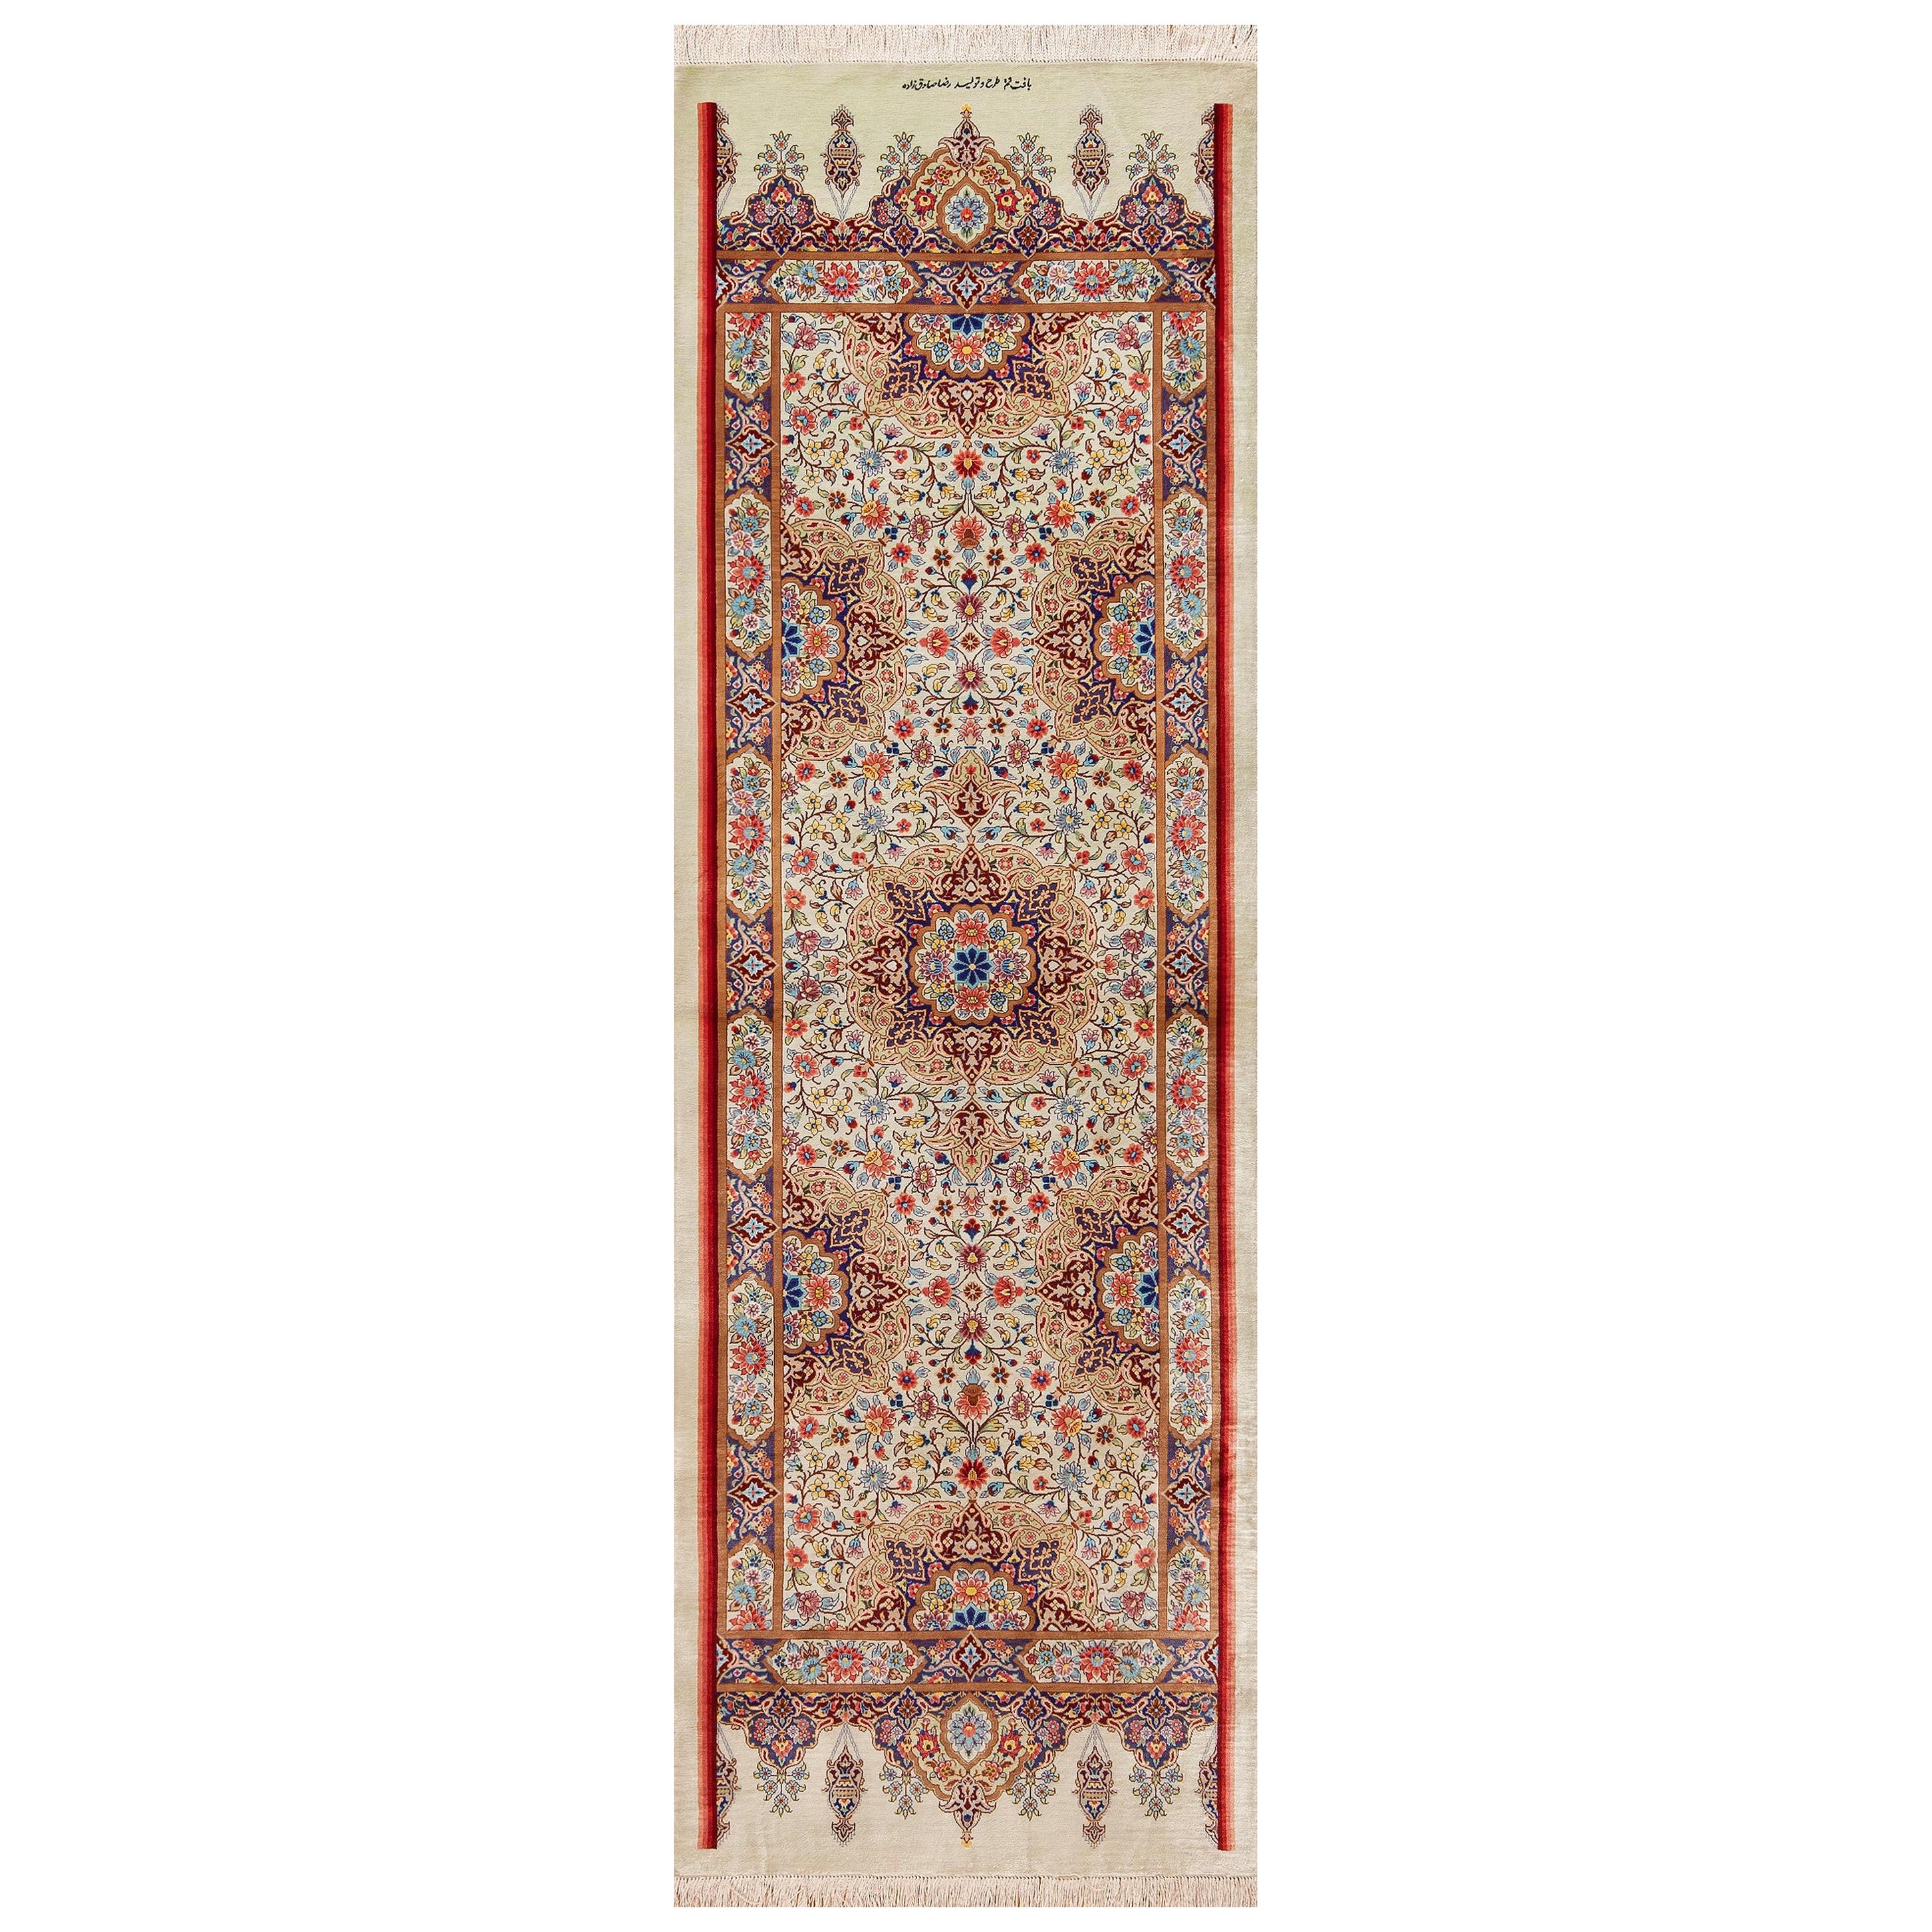 Fine Luxurious Silk Pile Floral Vintage Persian Qum Short Runner Rug 2'2" x 6'9" For Sale